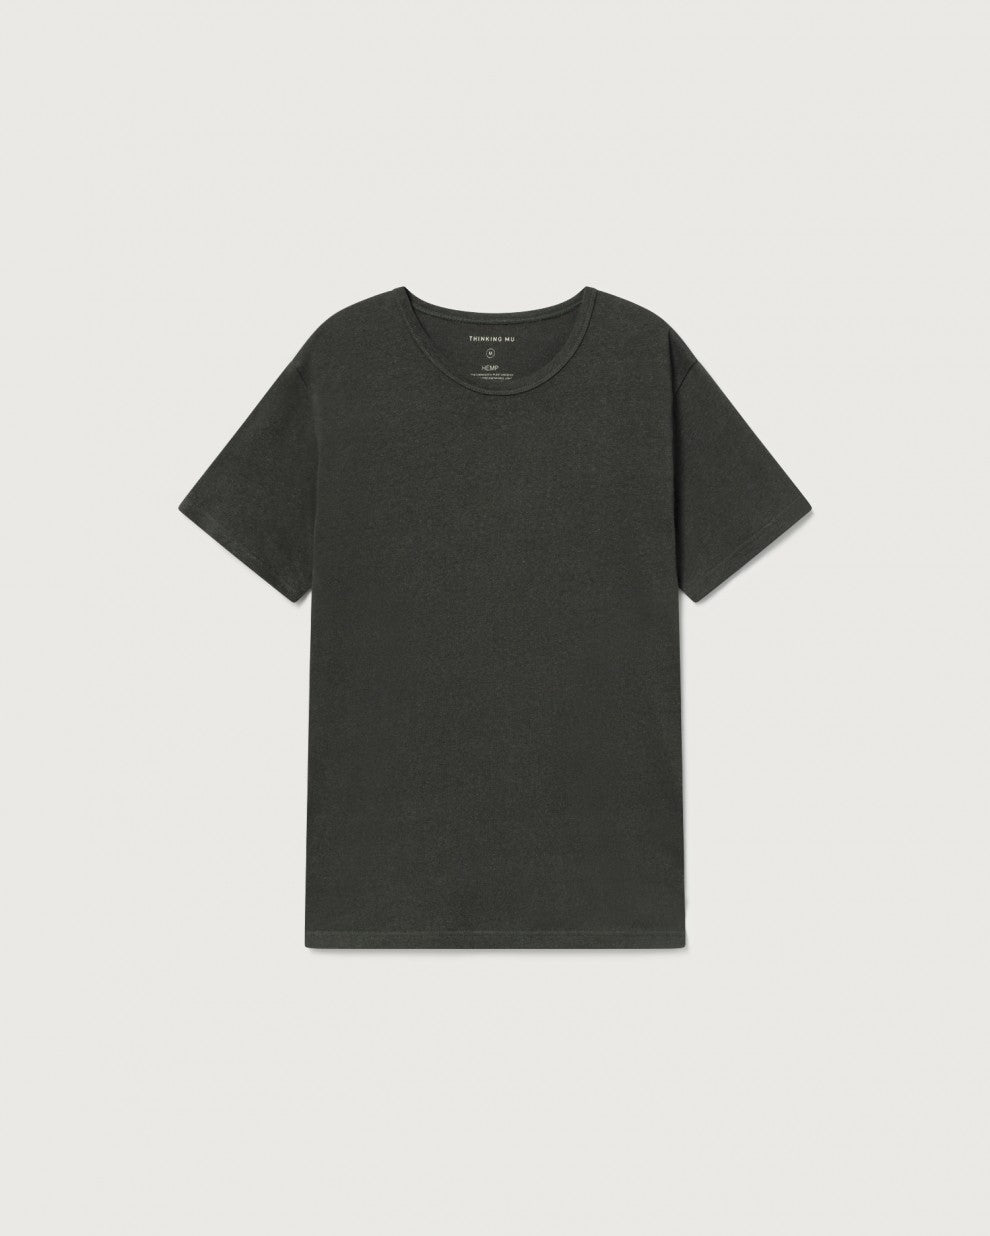 Basic Dark Green Hemp + Organic Cotton T-Shirt